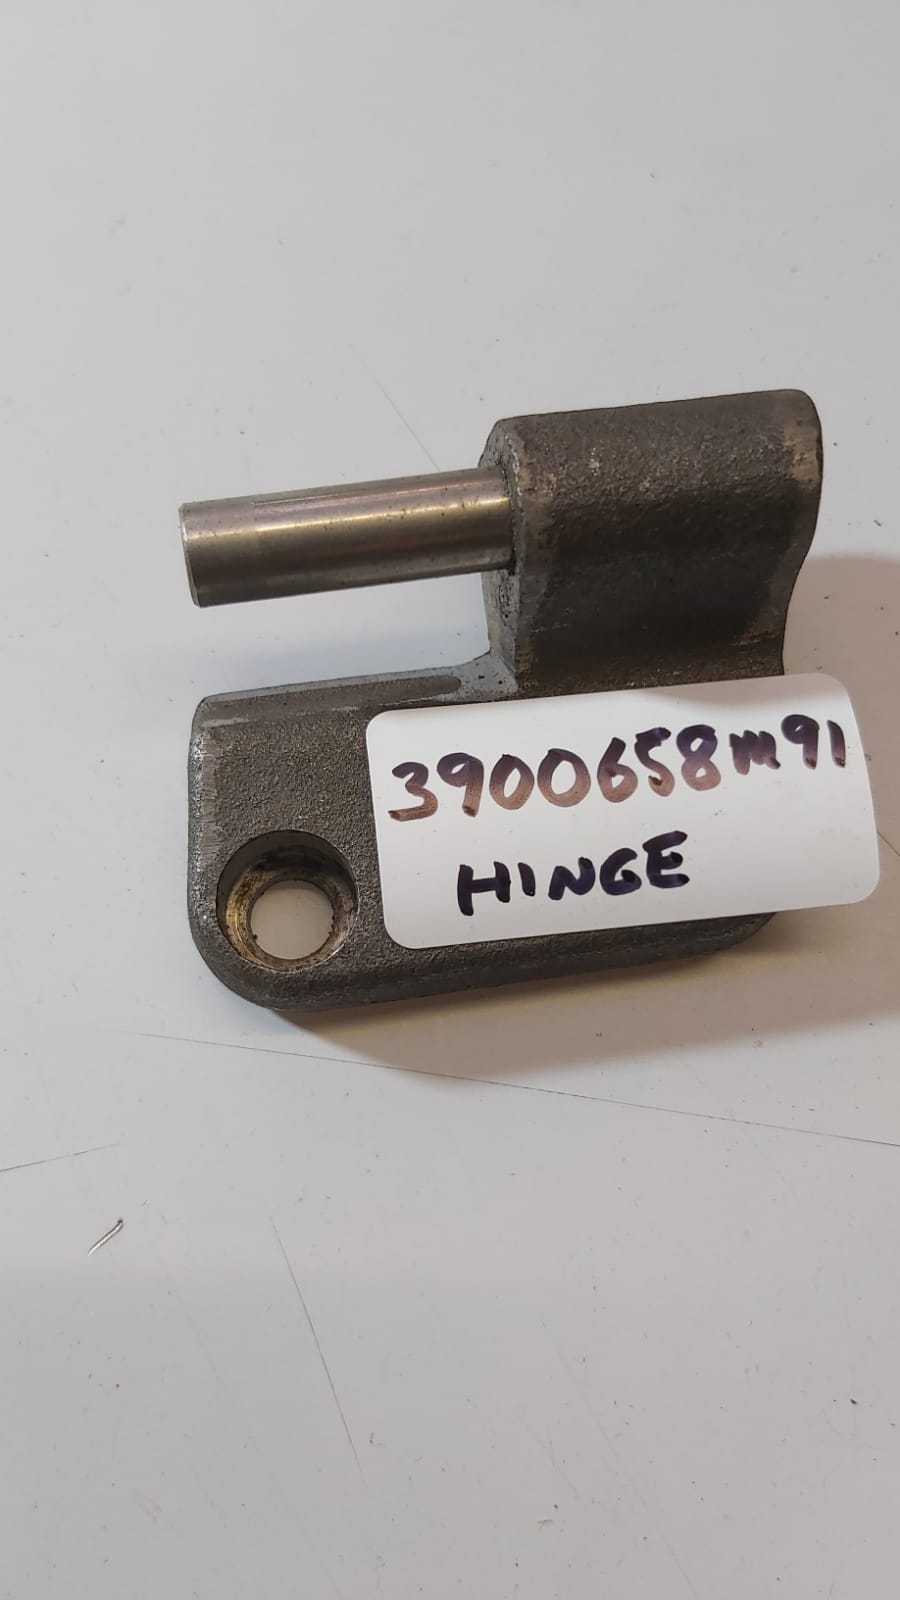 right-hand-hinge-3900658m91